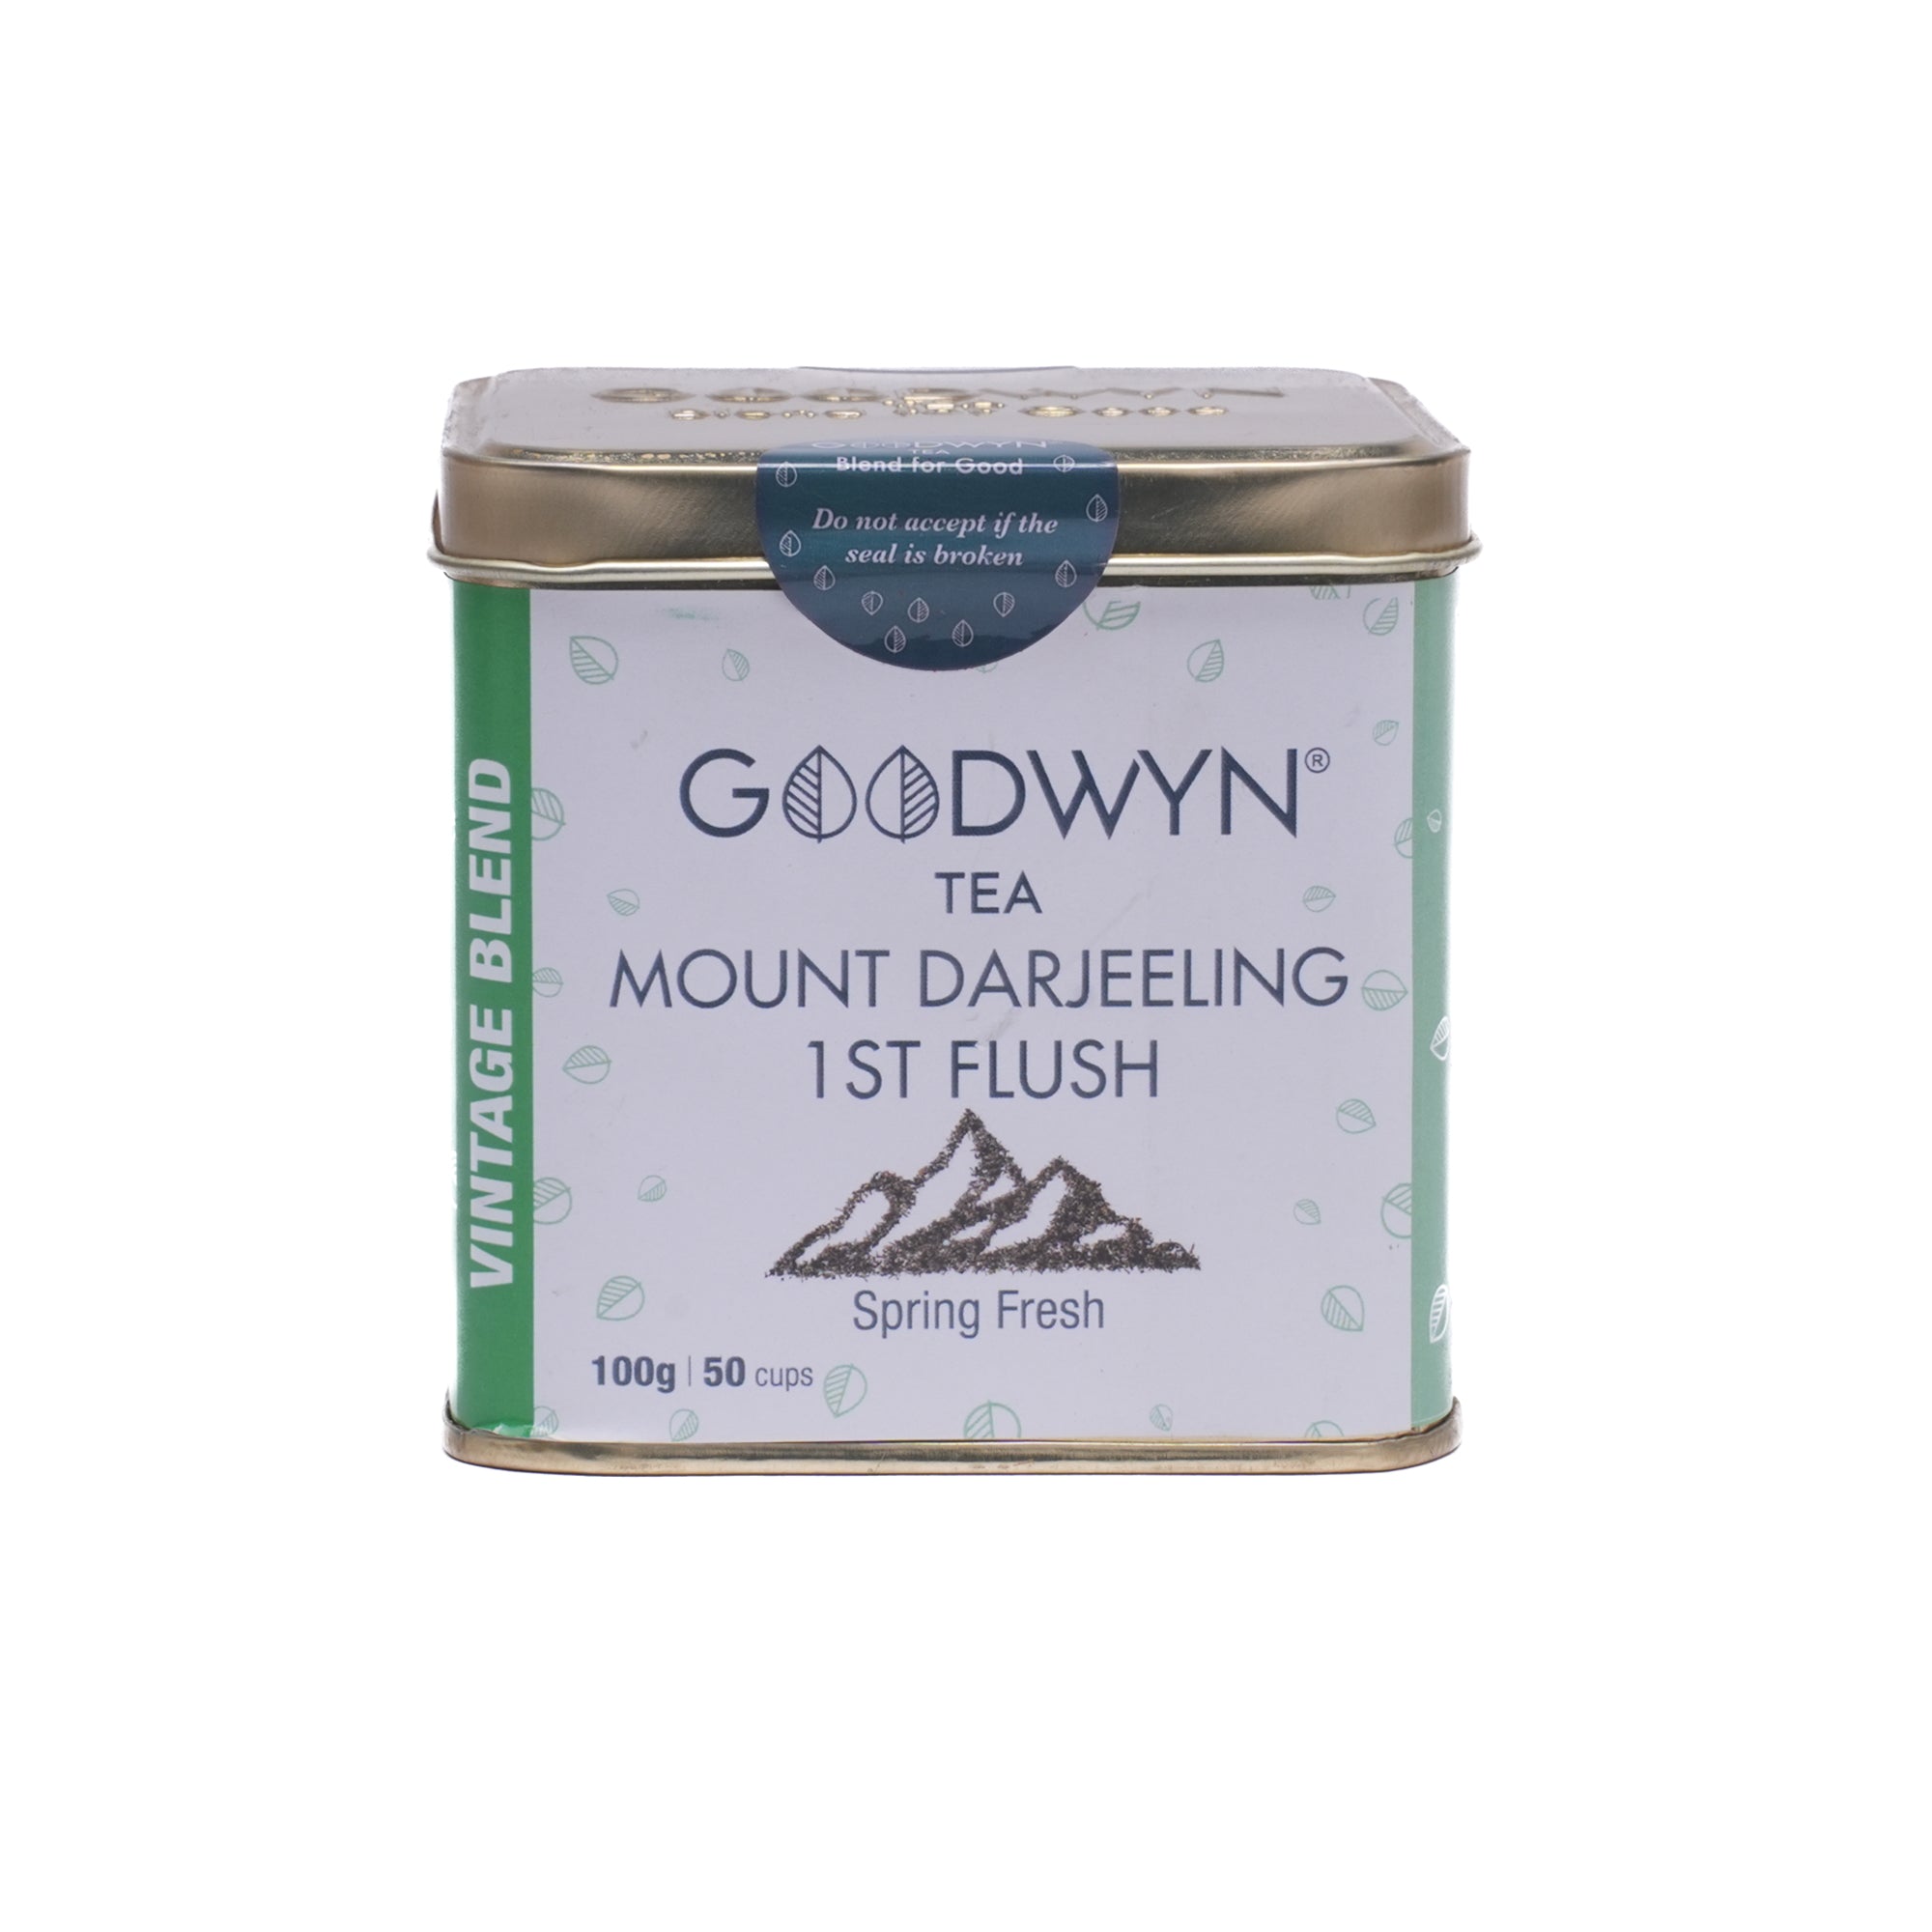 Mount Darjeeling 1st Flush Tea